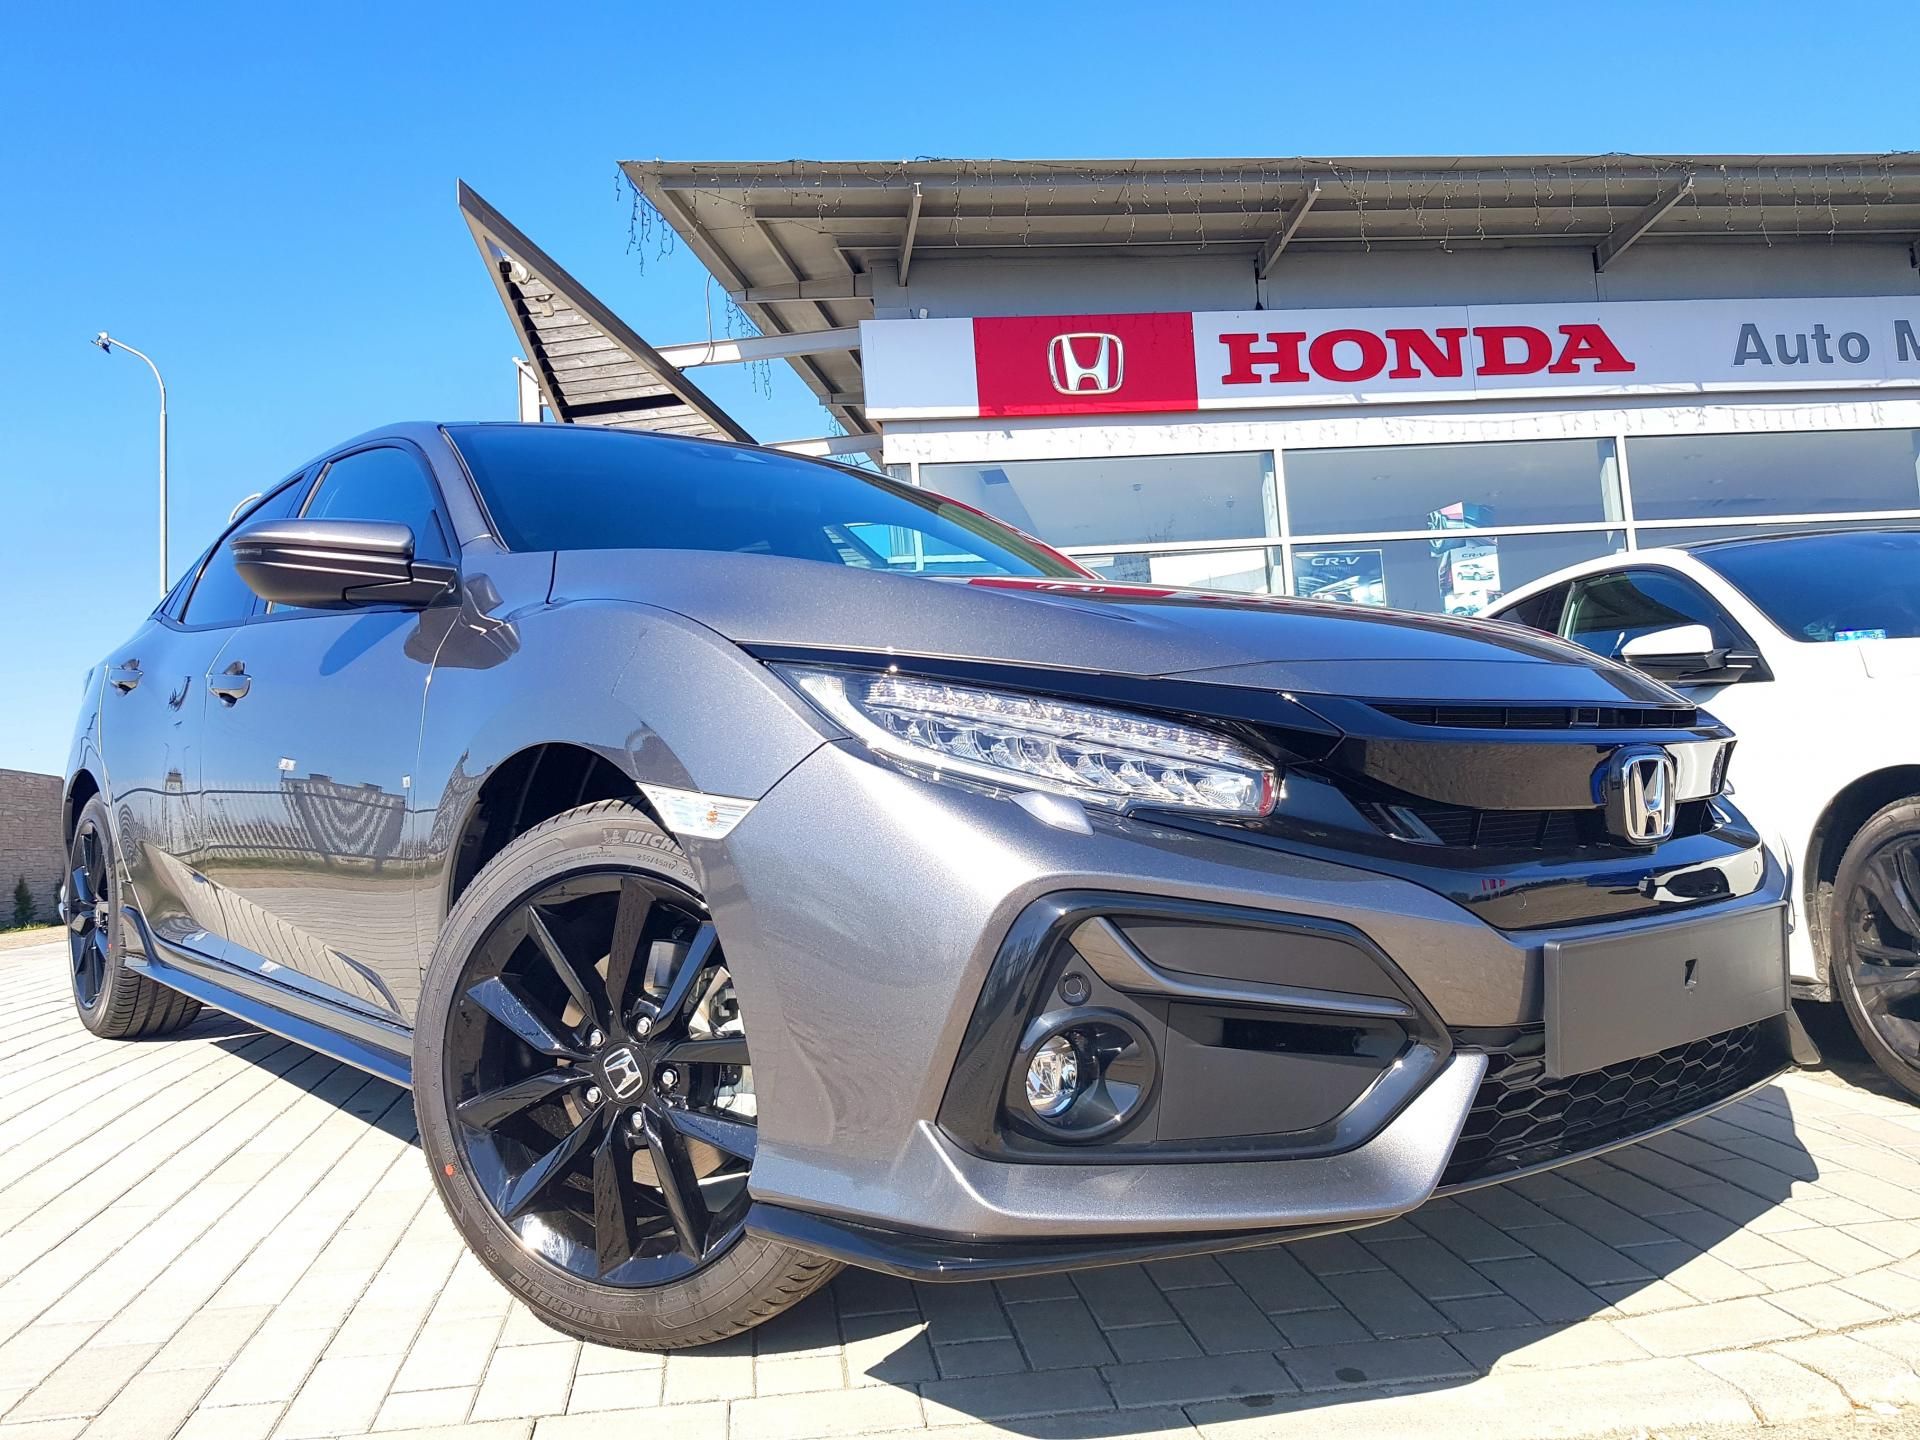 Honda 1.5 Jaka Moc